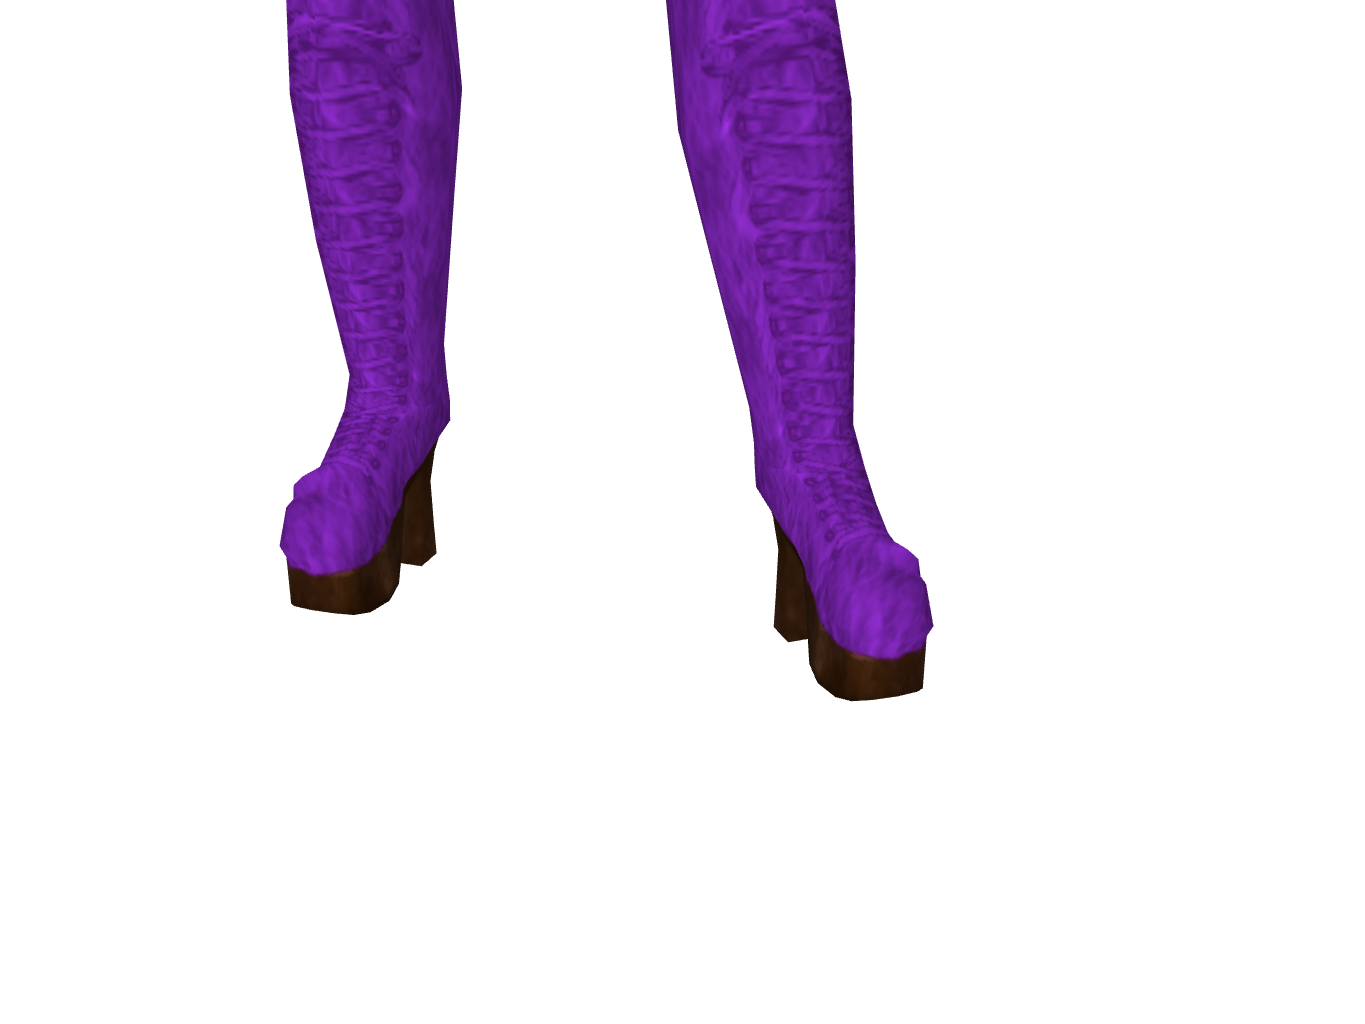 purple unicorn boots